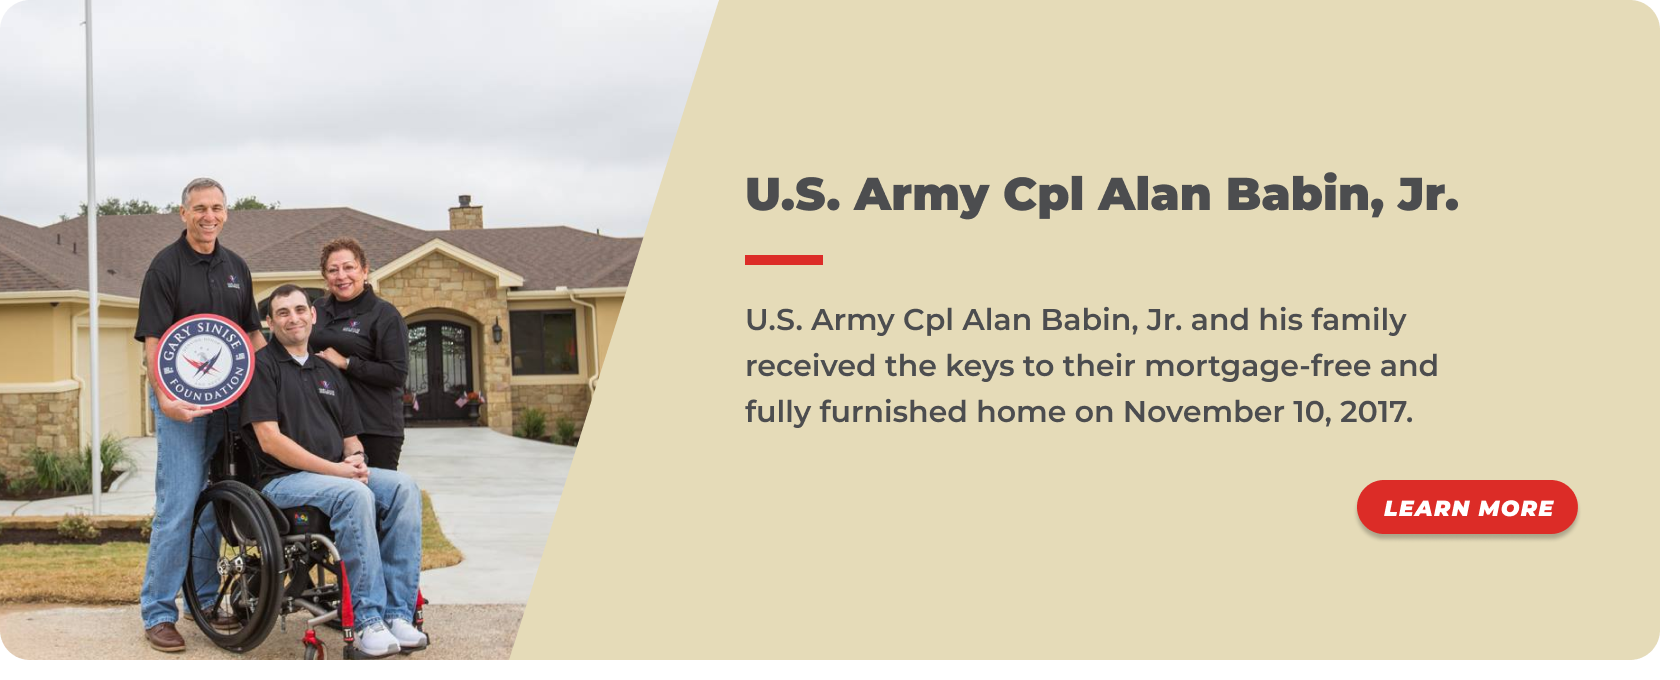 16 - U.S. Army Cpl Alan Babin, Jr.